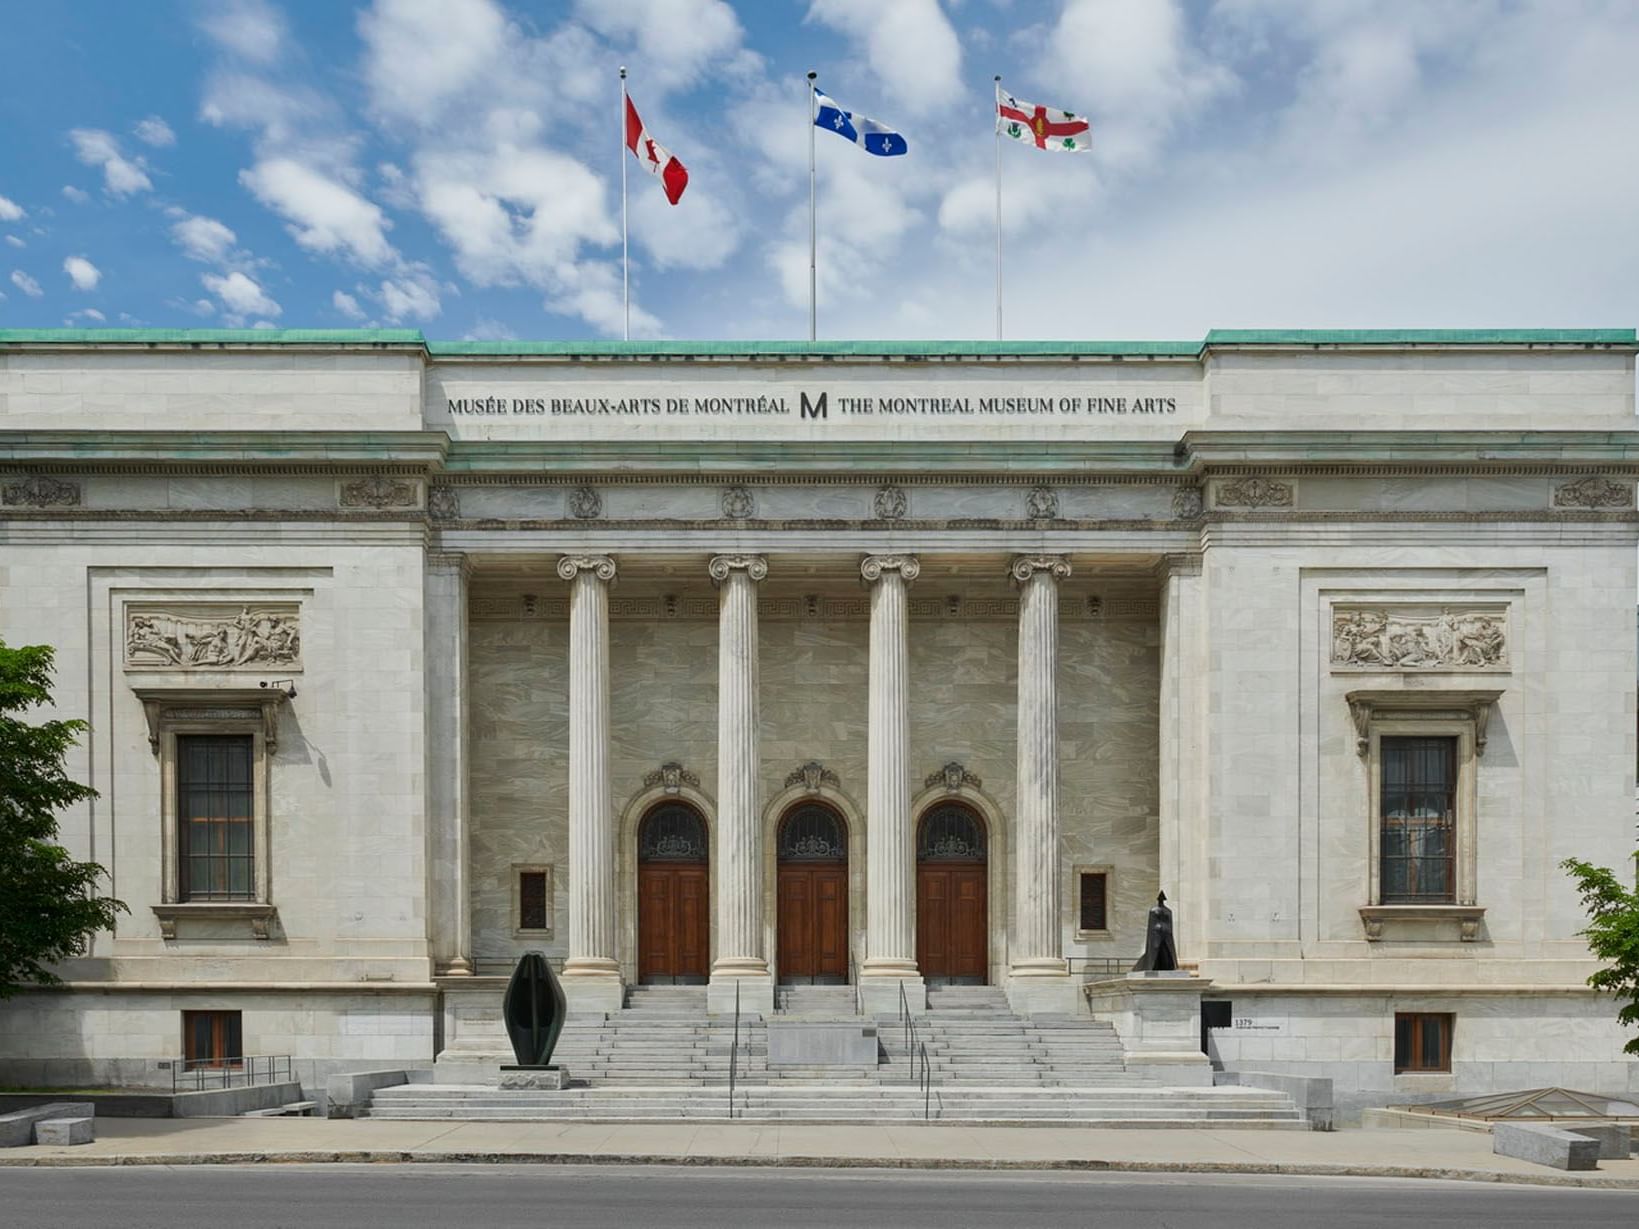 Montreal Museum of Fine Arts exterior near Honeyrose Hotel